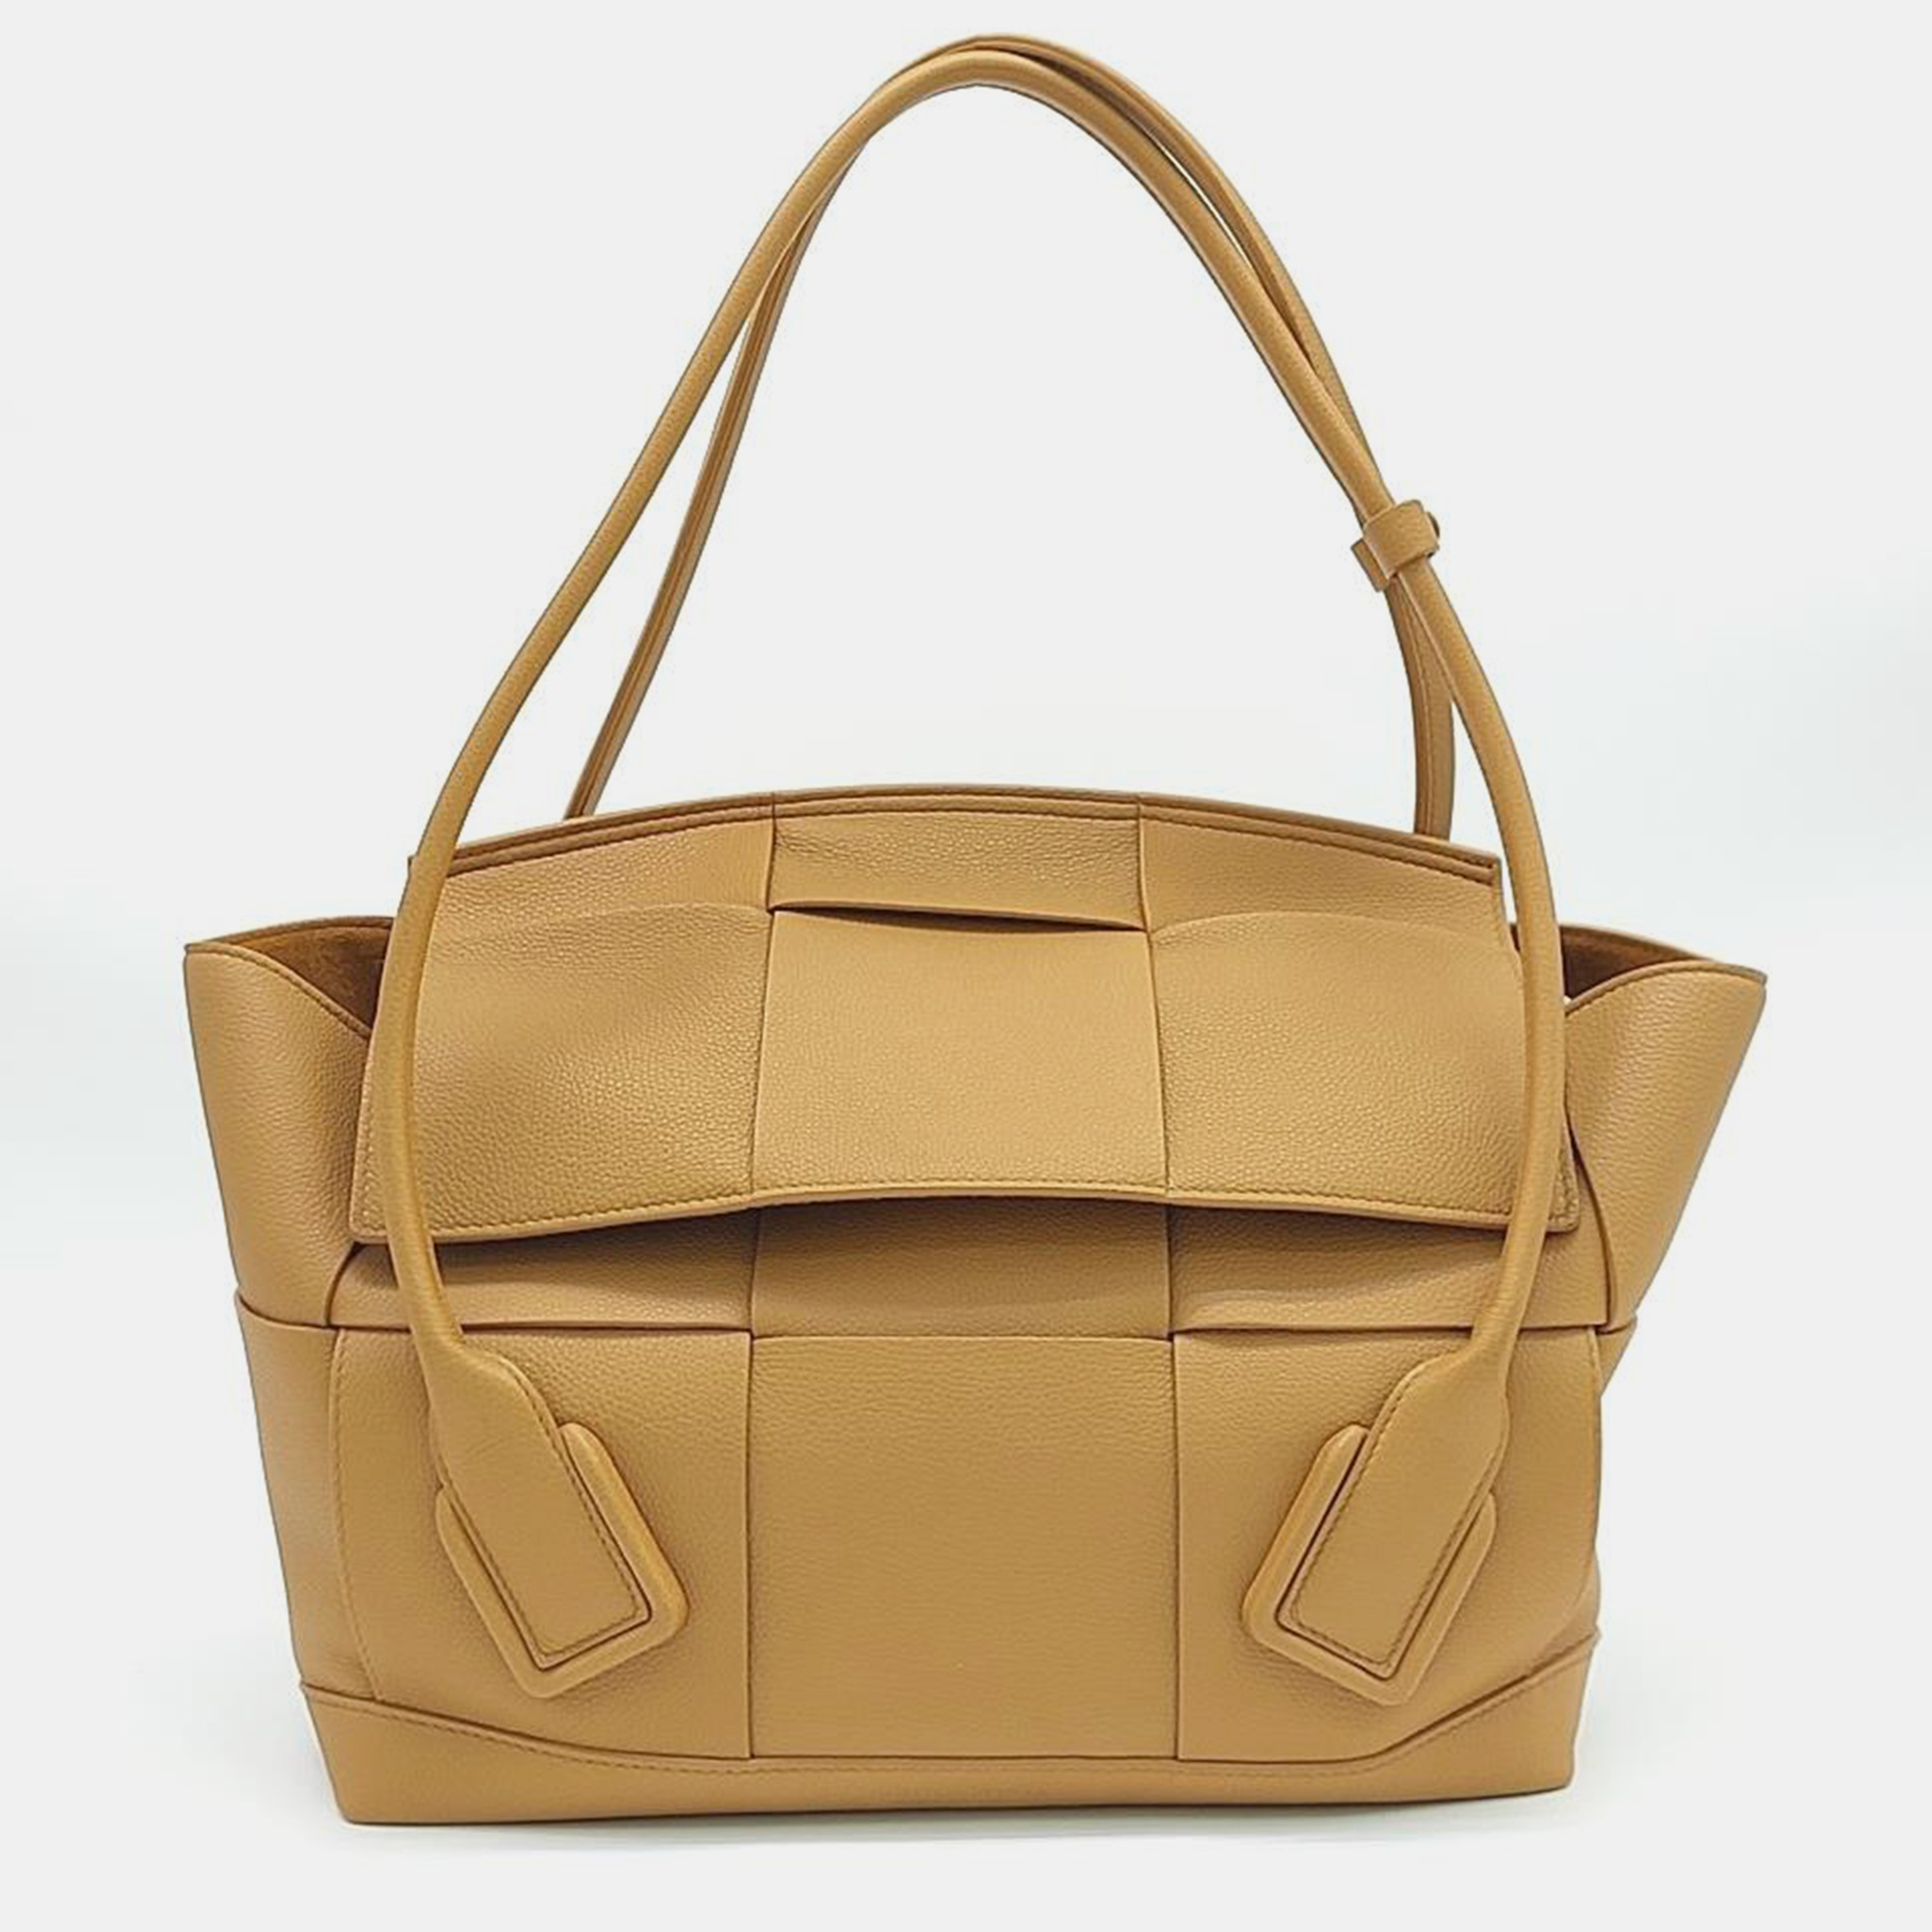 Bottega veneta biege leather arco medium handbag